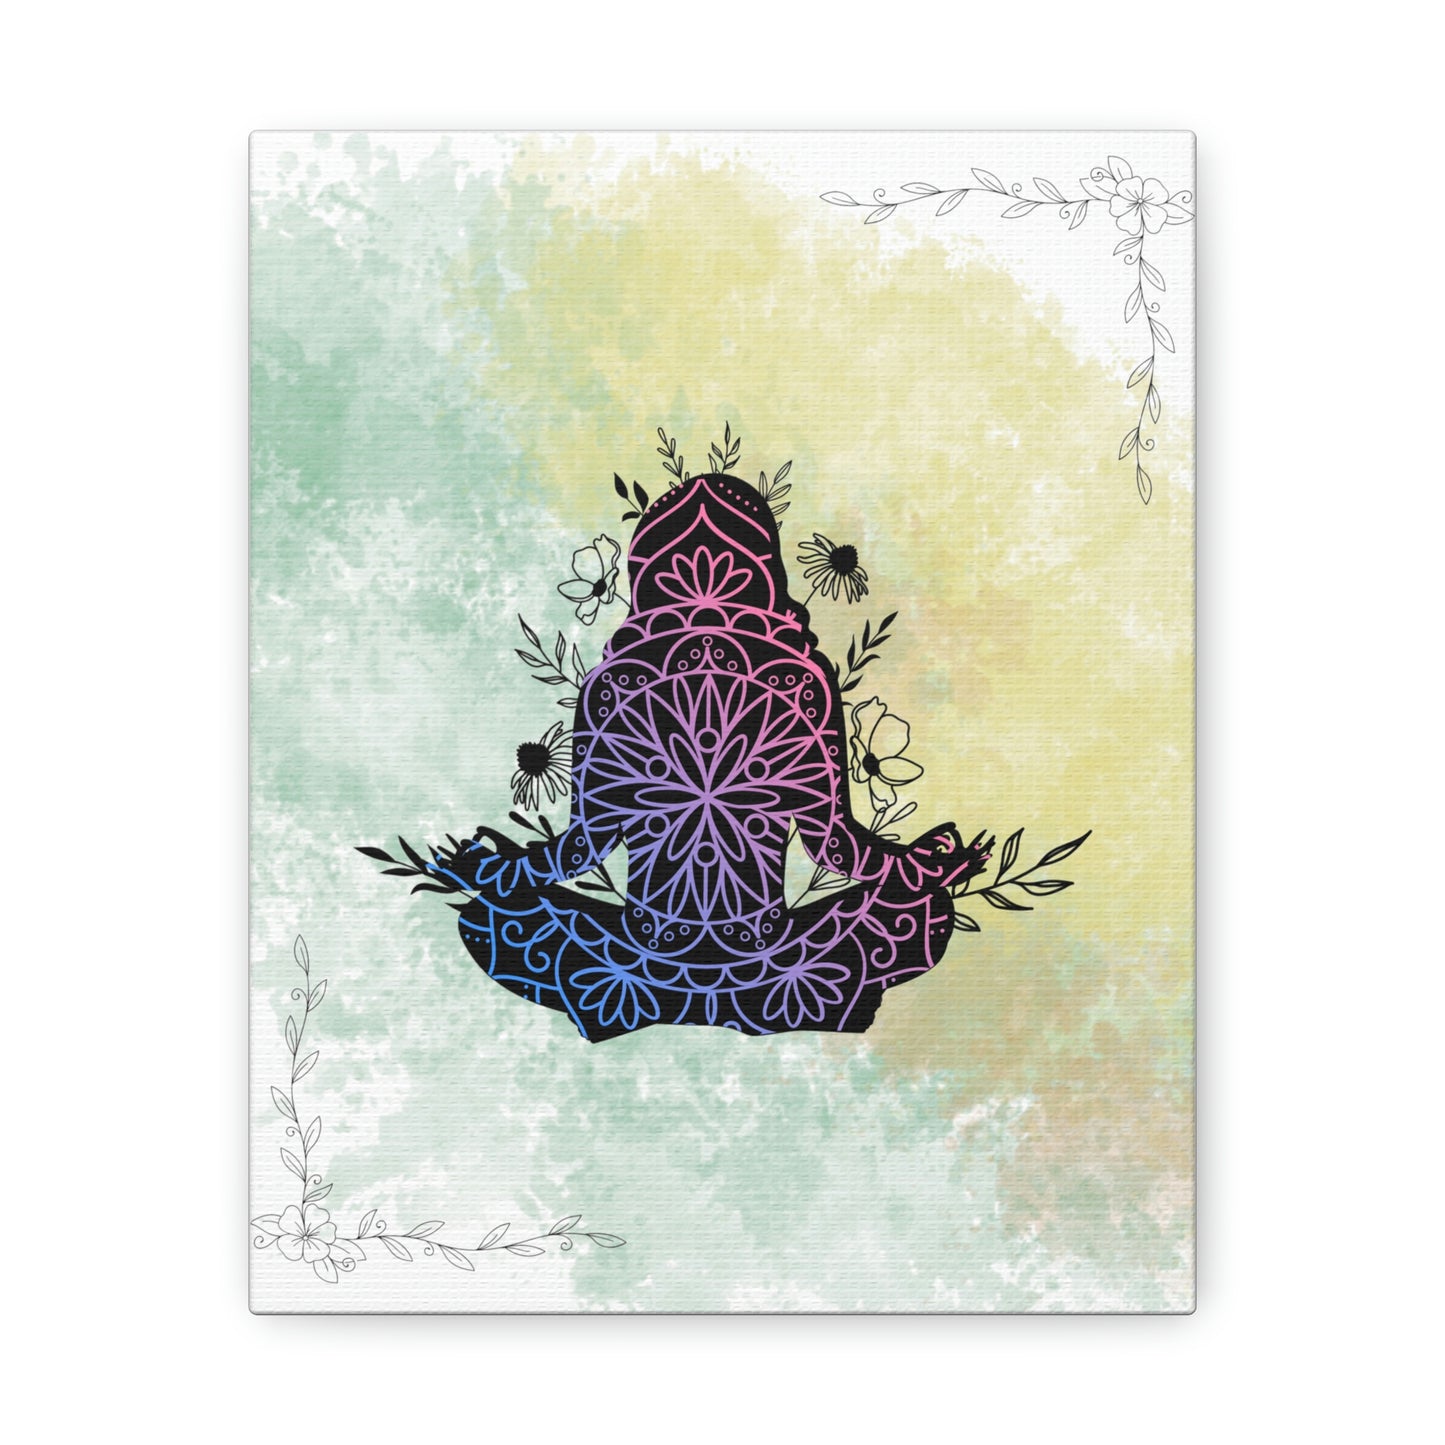 The "Meditative Mandala"  Wrapped Canvas 8 x 10 - NO FRAME Needed